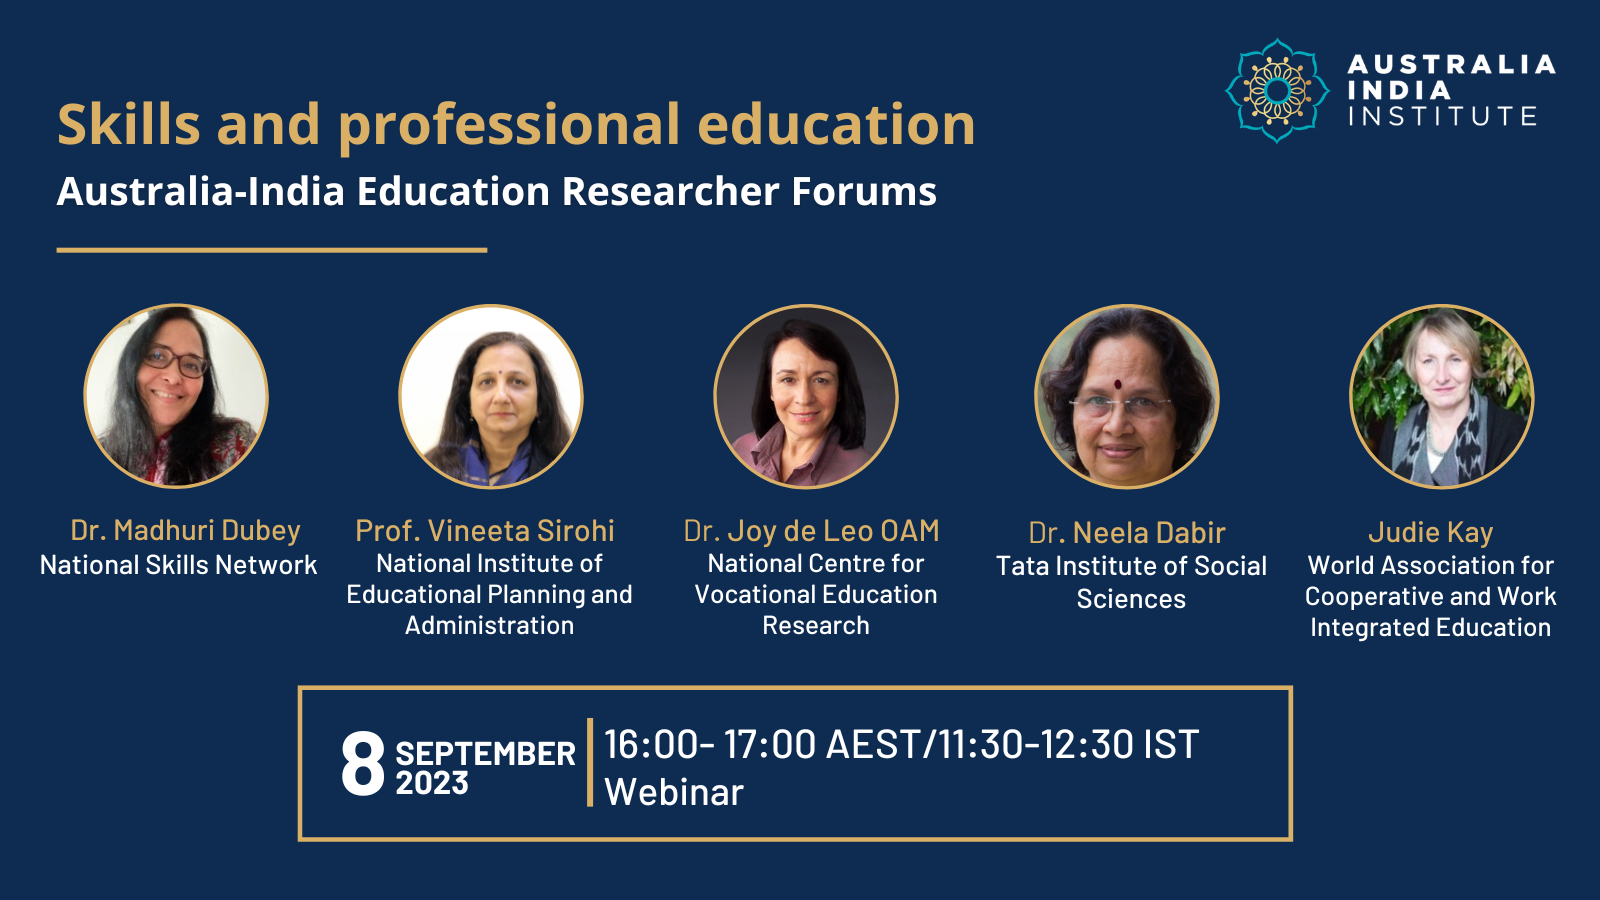 Australia India Researchers Forum - Skills and Professional Education (1)